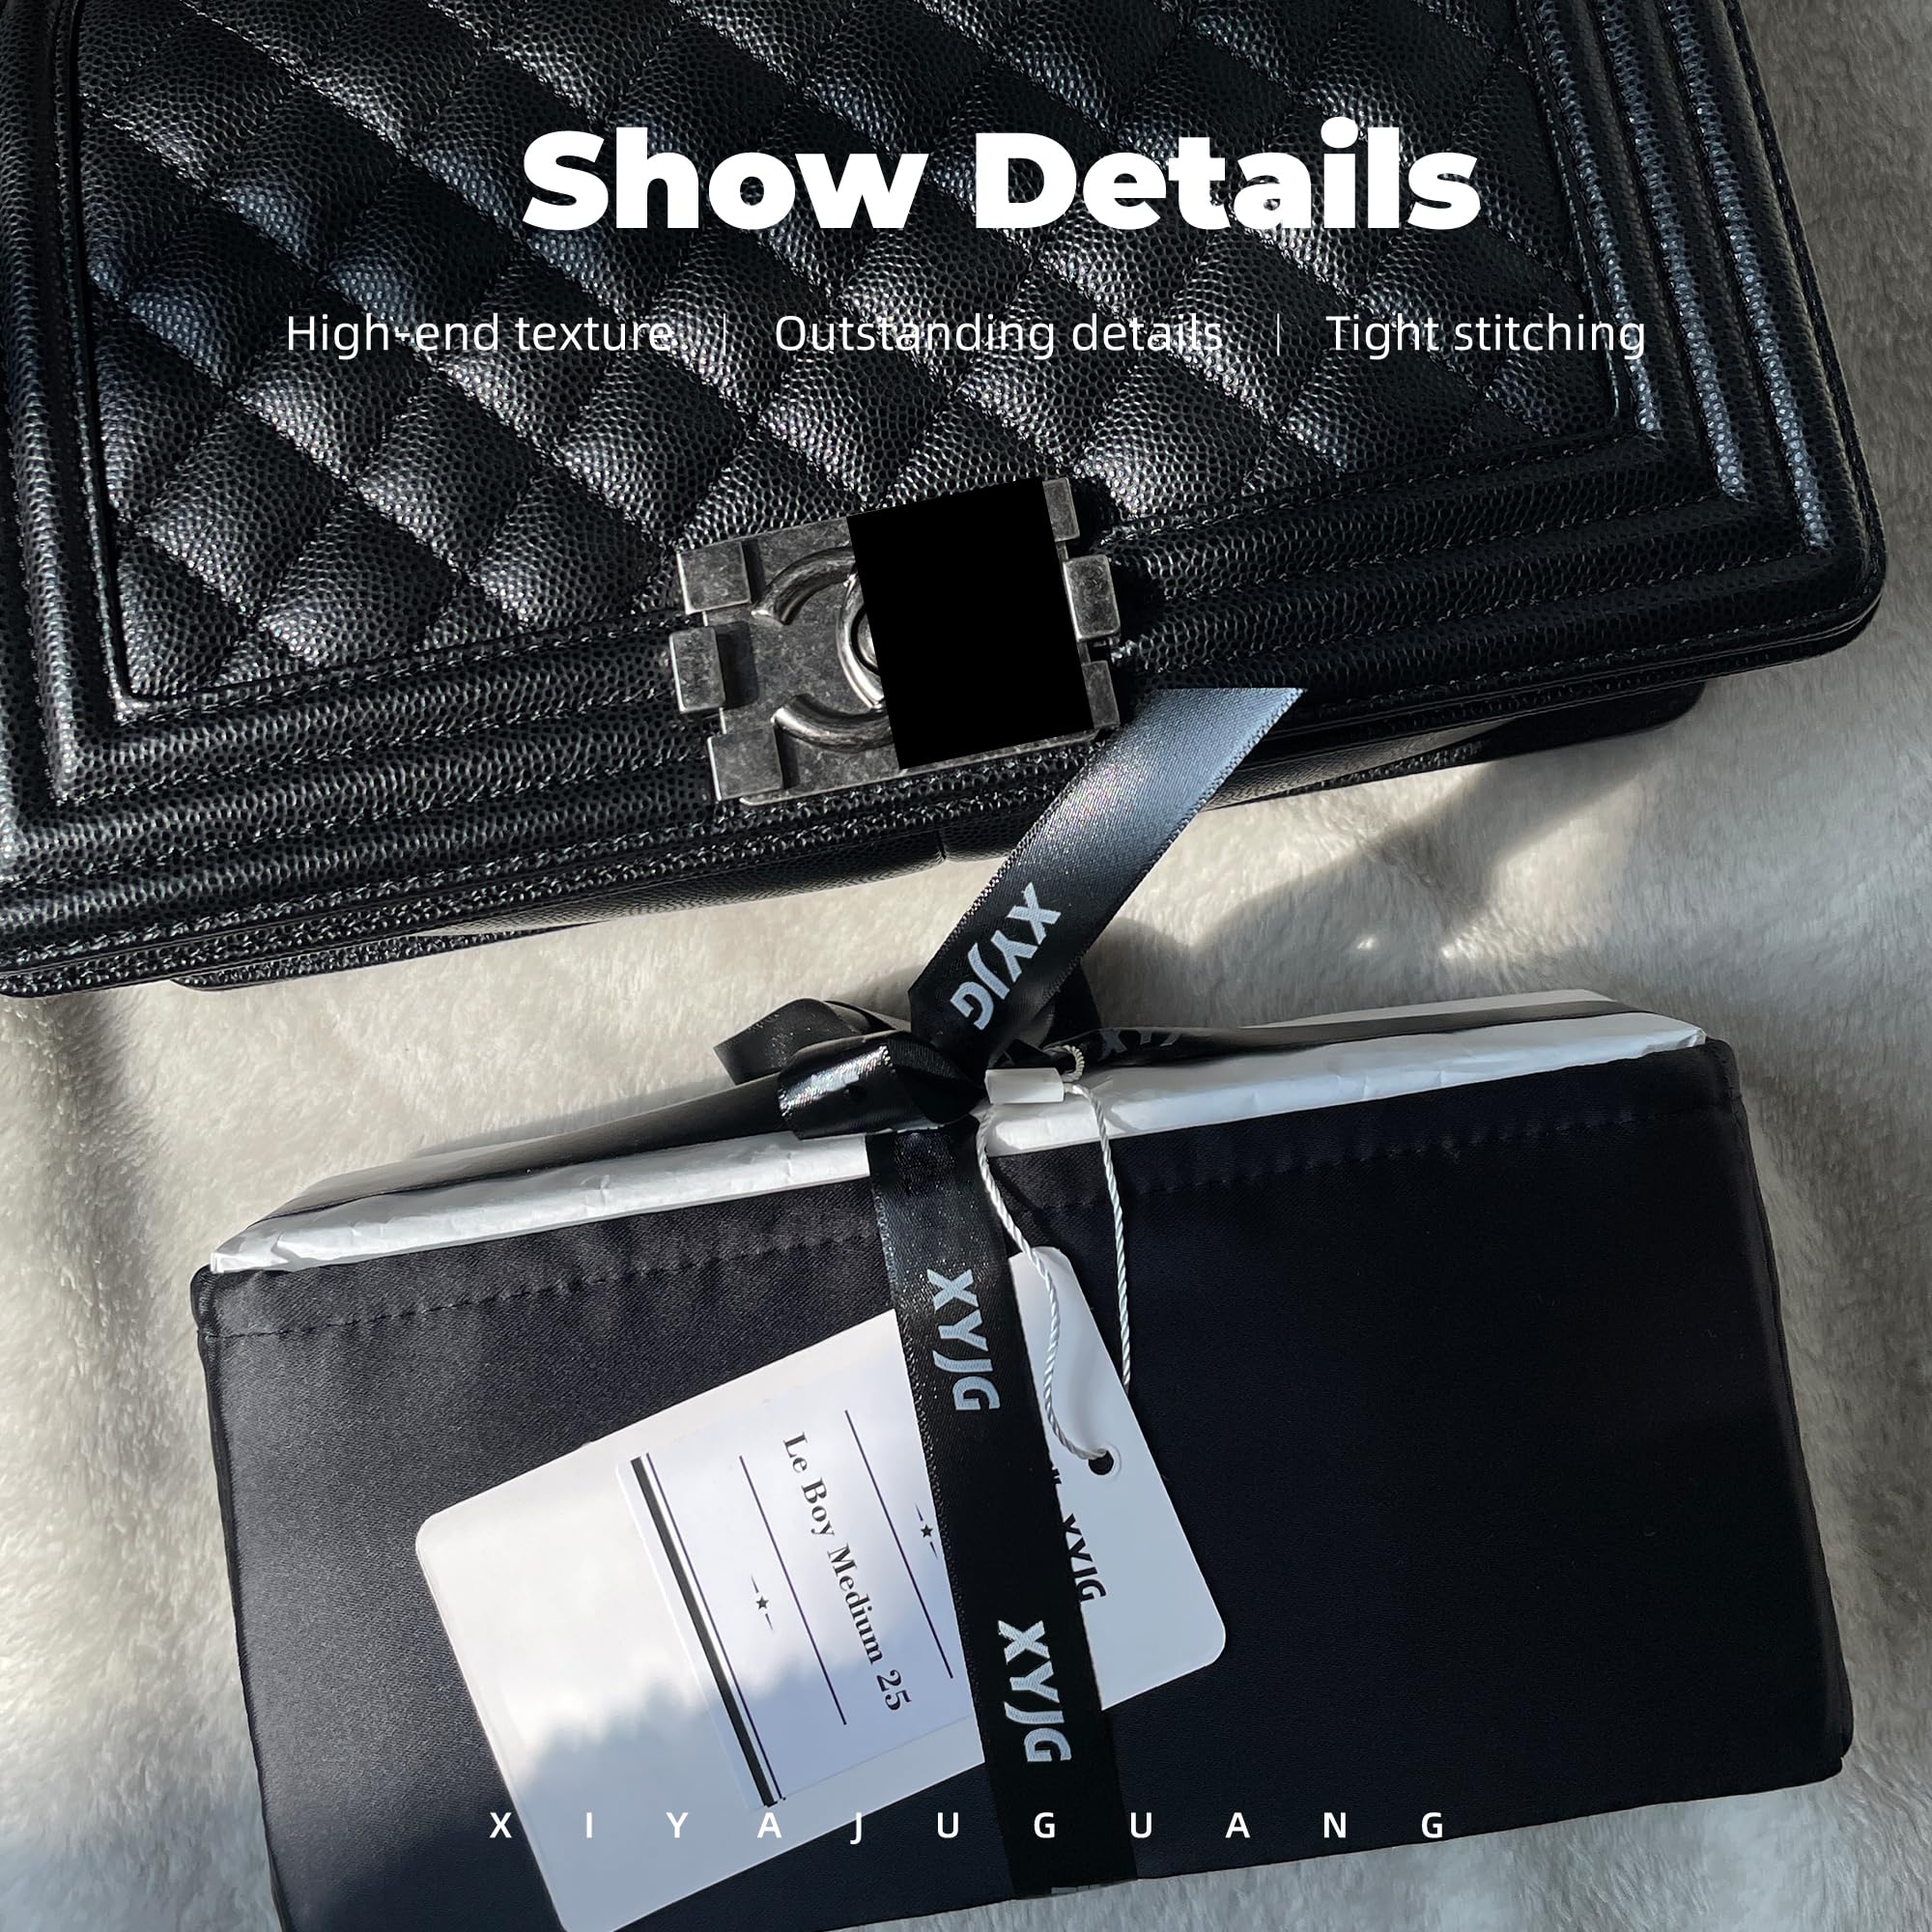 XYJG Purse Handbag Silky Organizer Insert Keep Bag Shape Fits LV Chanel Leboy Small/Medium/New Medium/Large Bags, Luxury Handbag Tote Lightweight Sturdy(Small 20,Black)